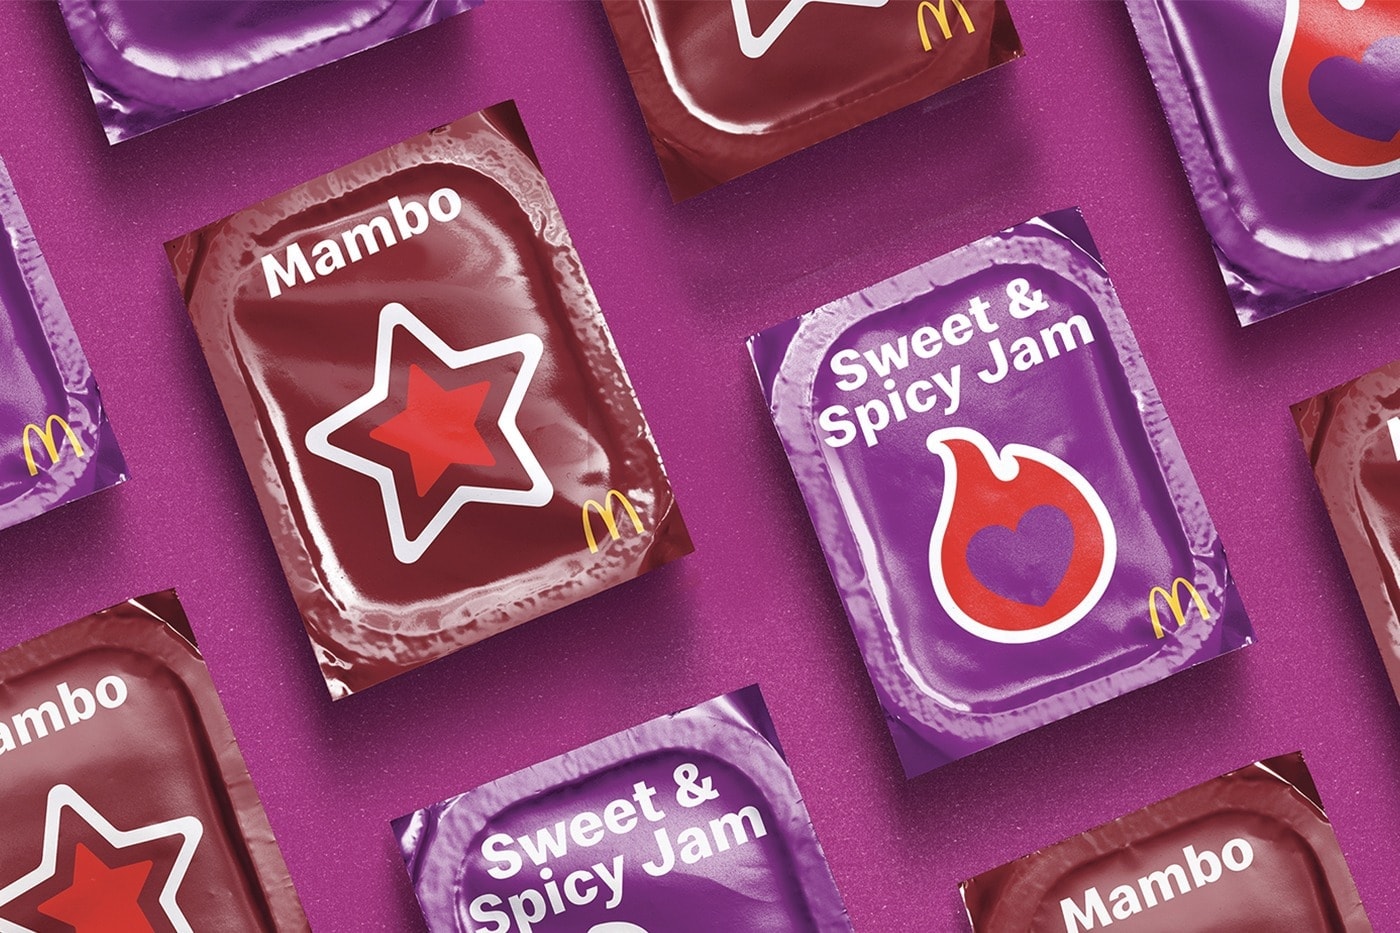 McDonald’s 推出「Sweet & Spicy Jam Sauce」、「Mambo Sauce」兩款全新醬料